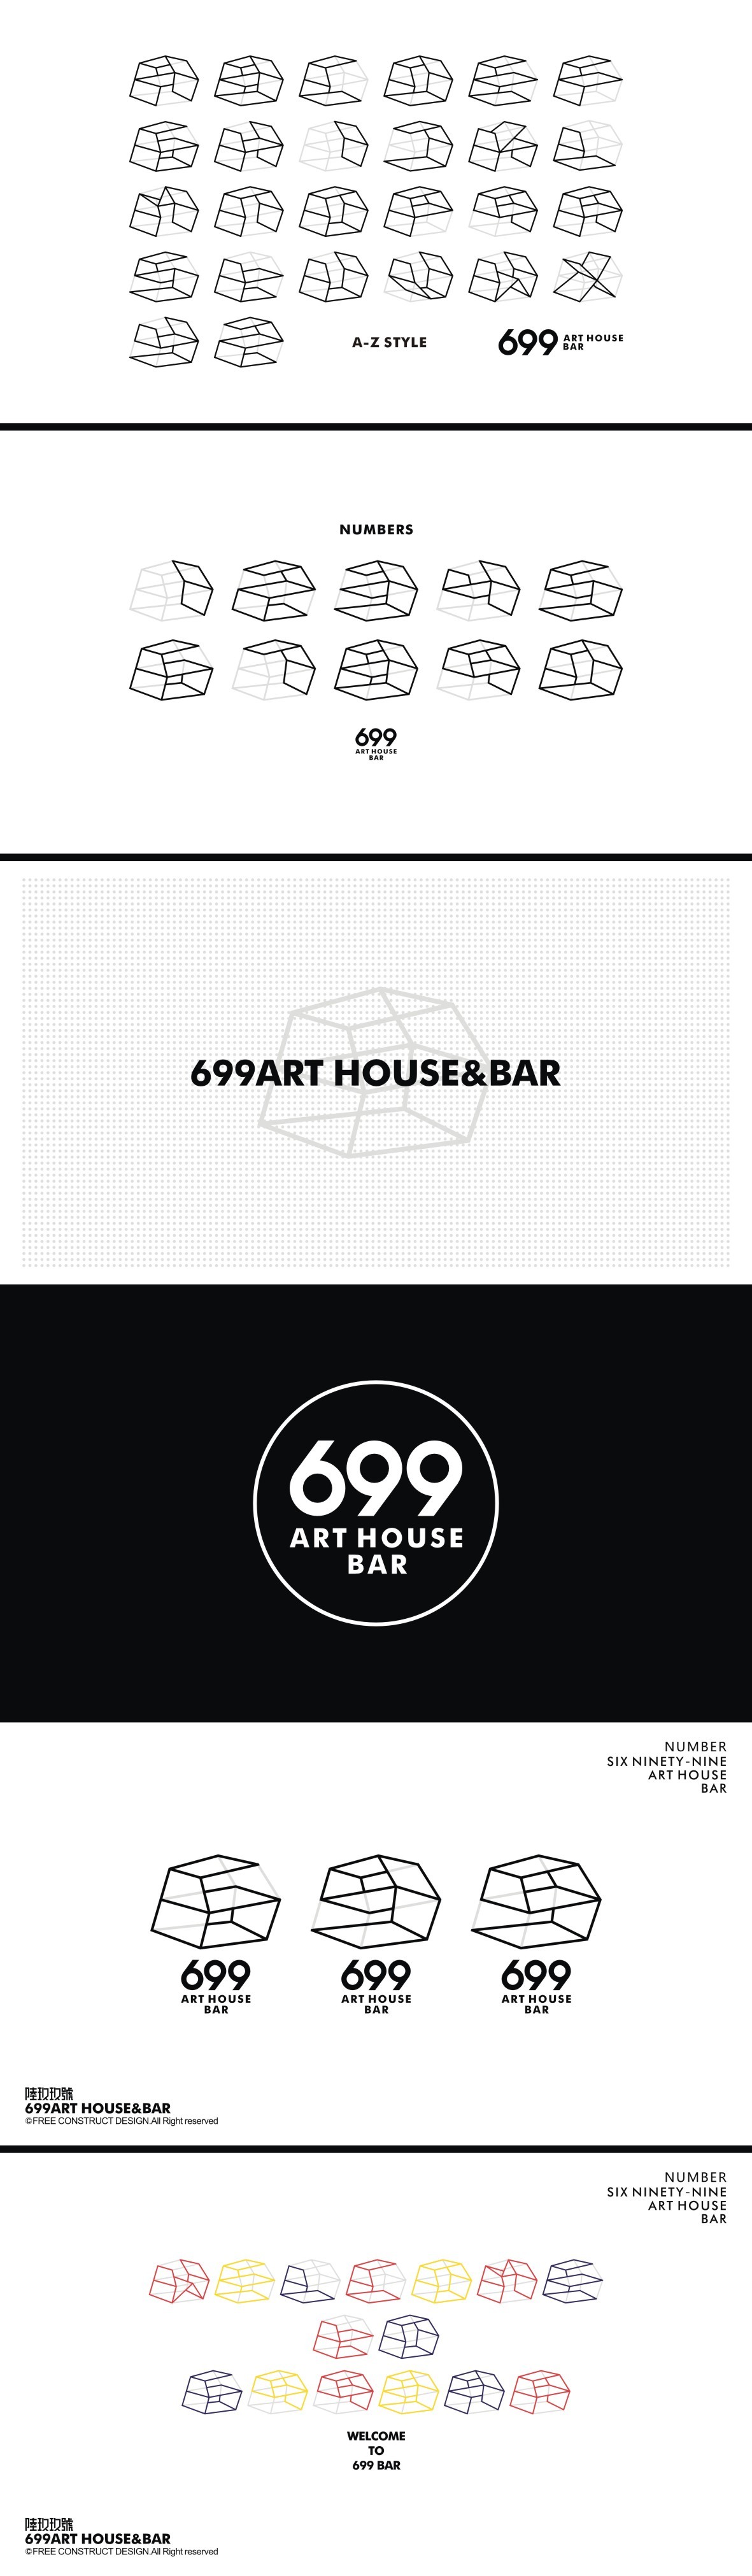 699 ART HOUSE&BAR图2